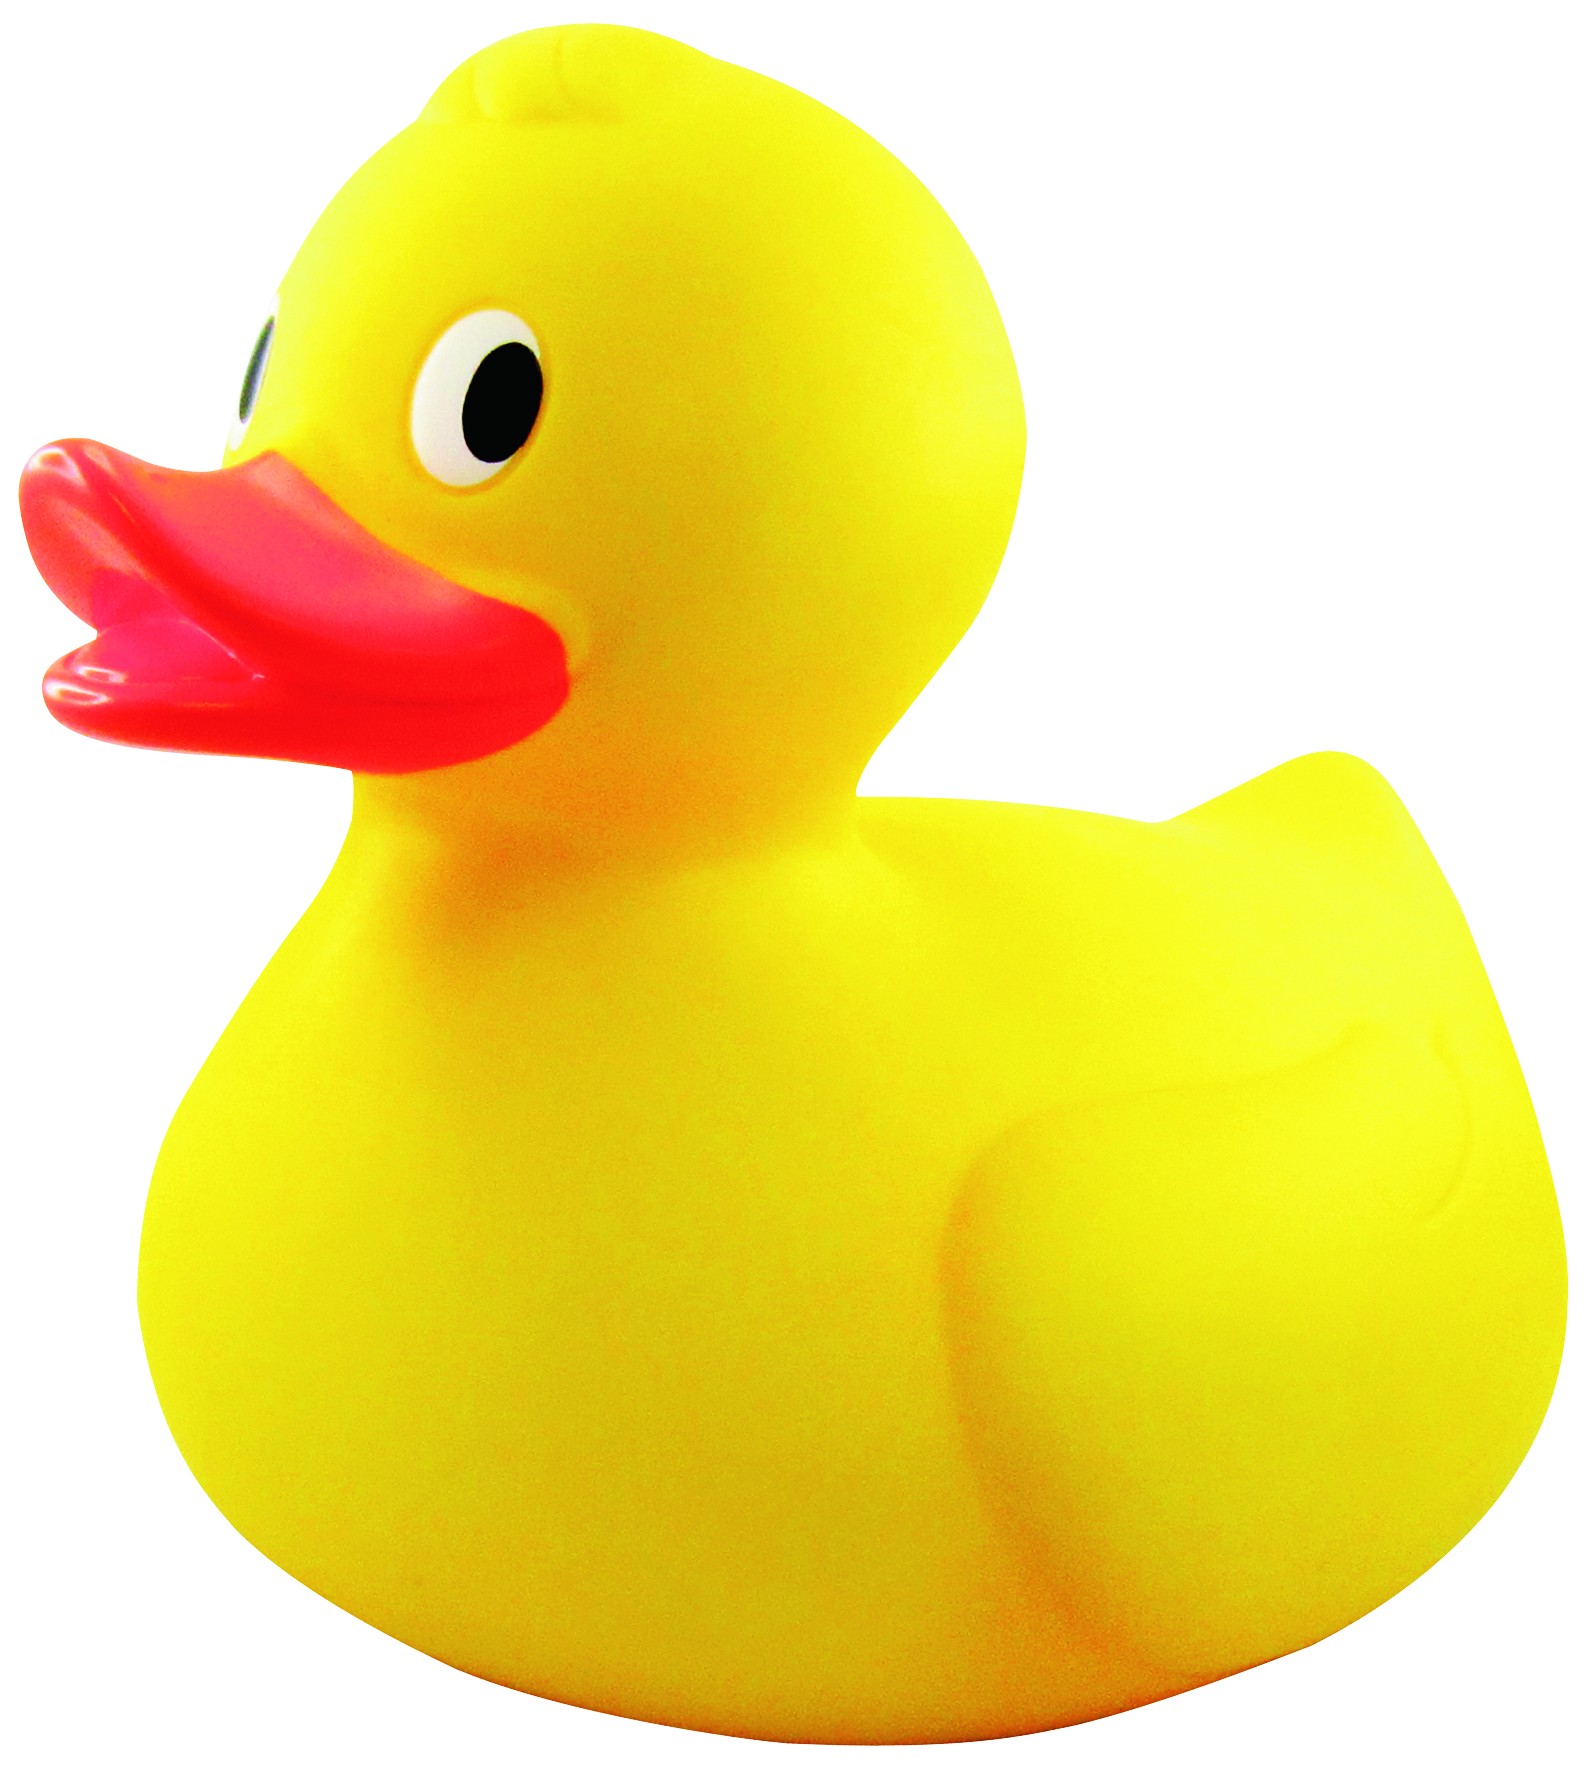 rubber-duck2.jpg